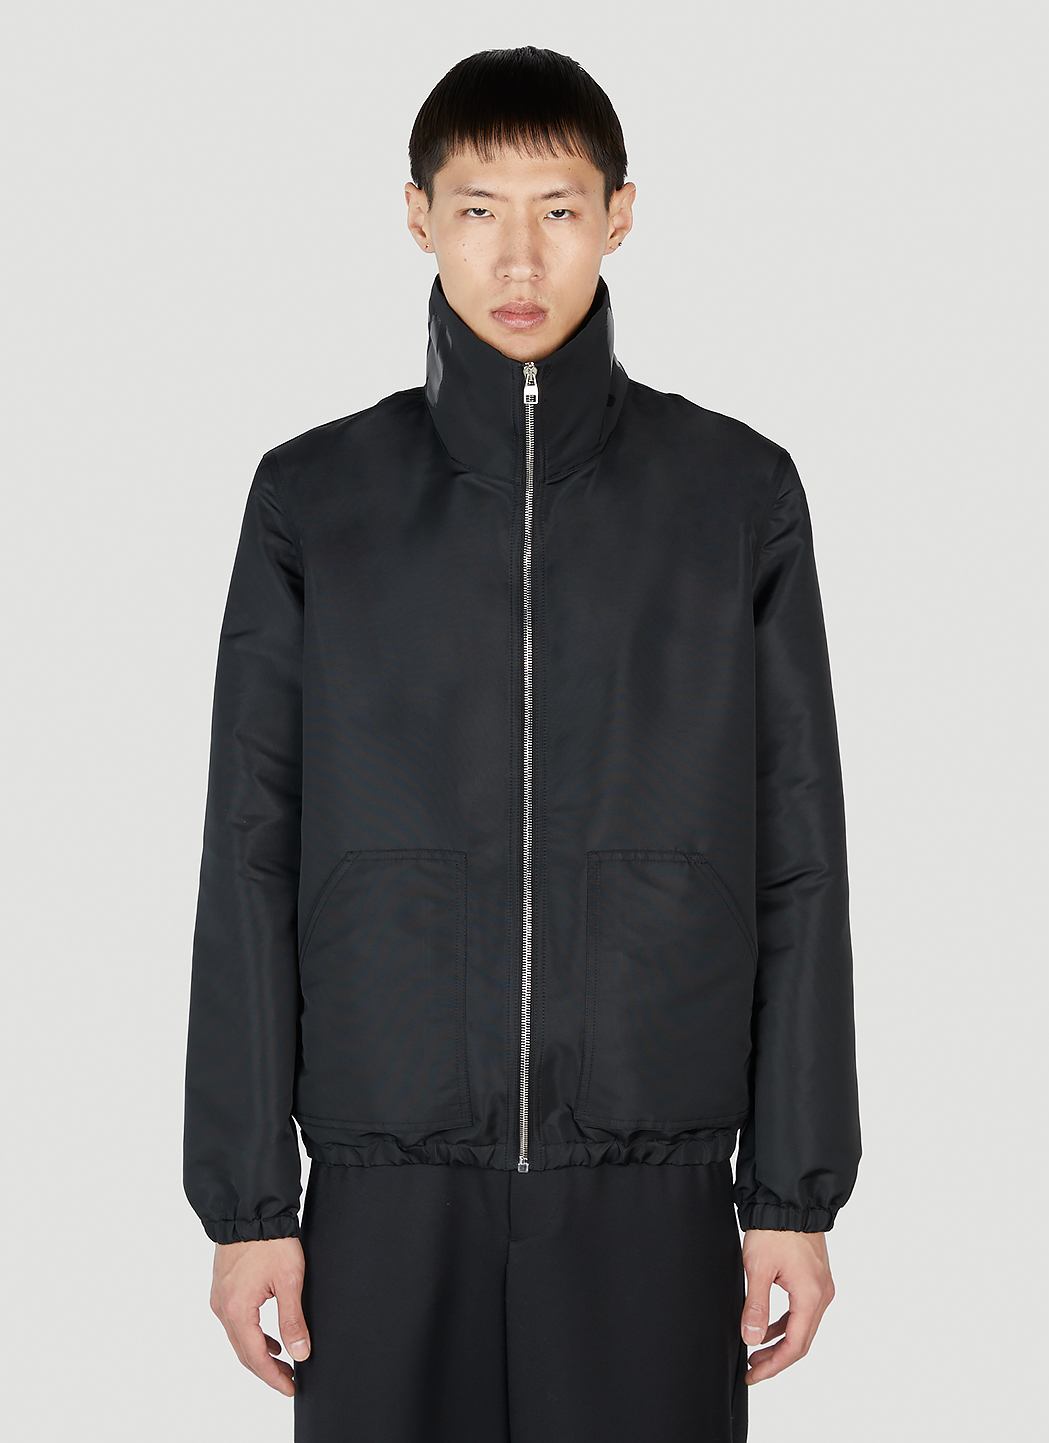 Alexander McQueen Men's Windbreaker Jacket in Black | LN-CC®